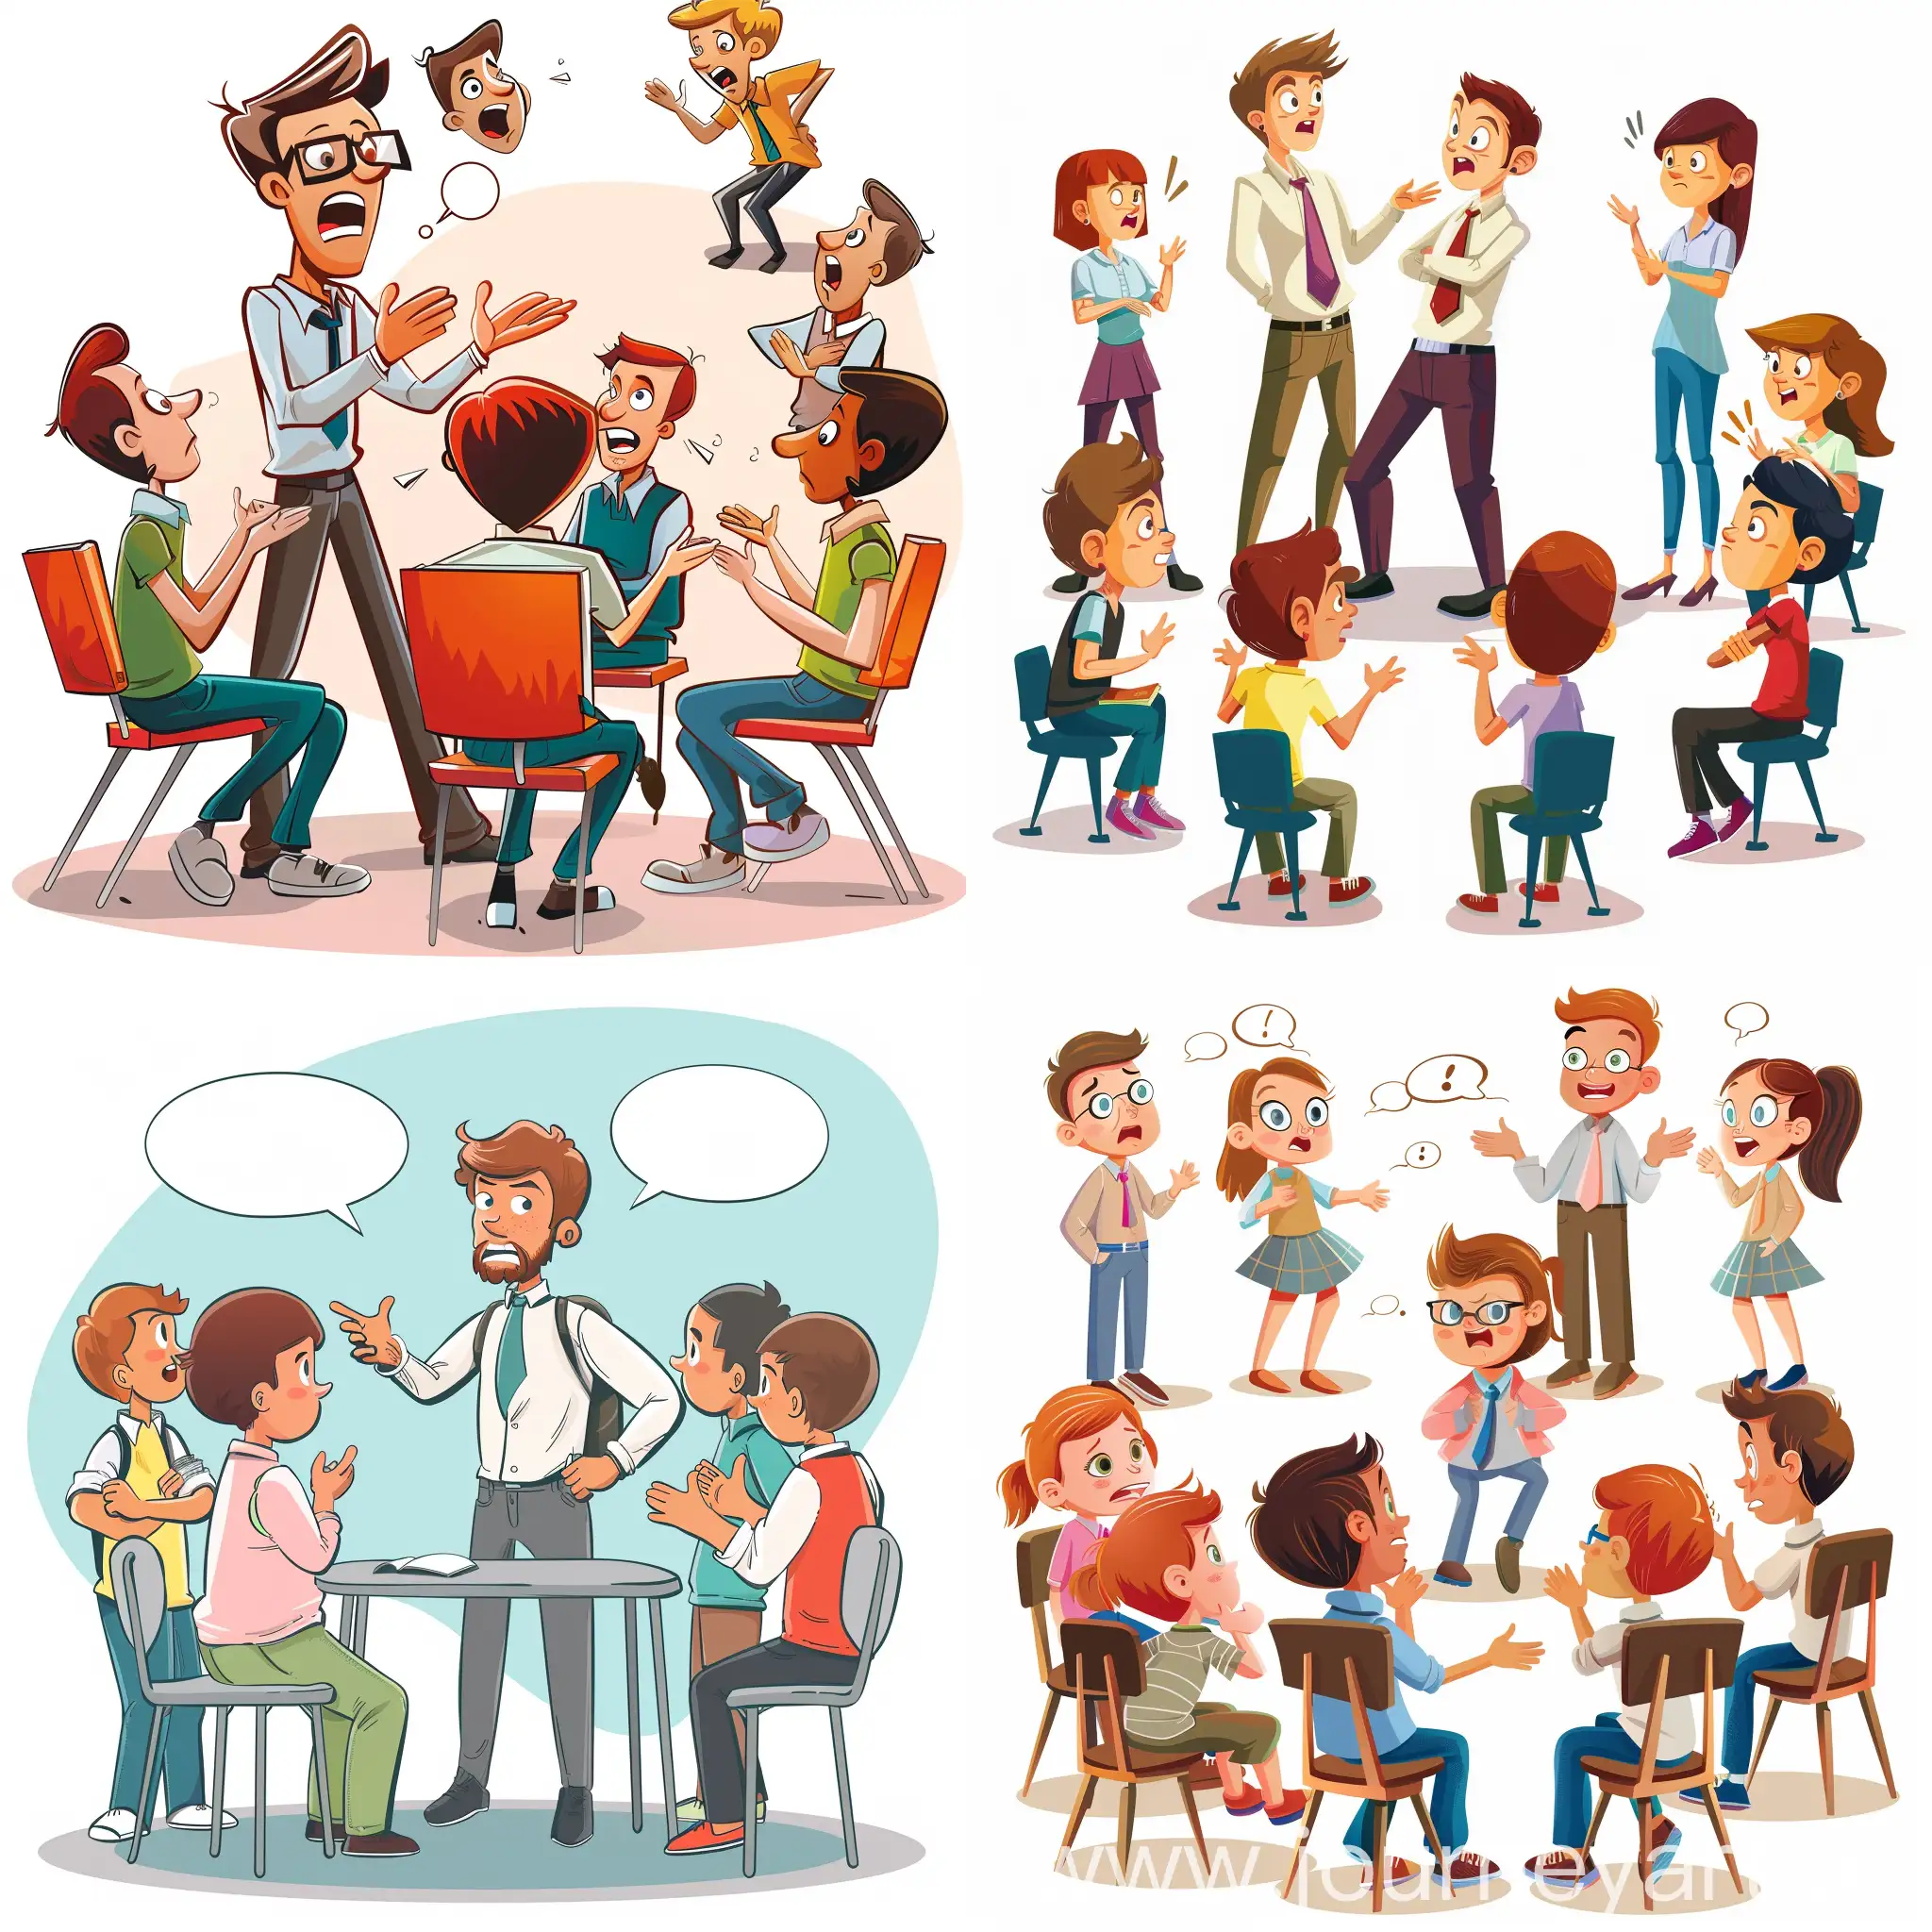 Cheerful-Classroom-Chaos-Playful-Students-Distract-Teacher